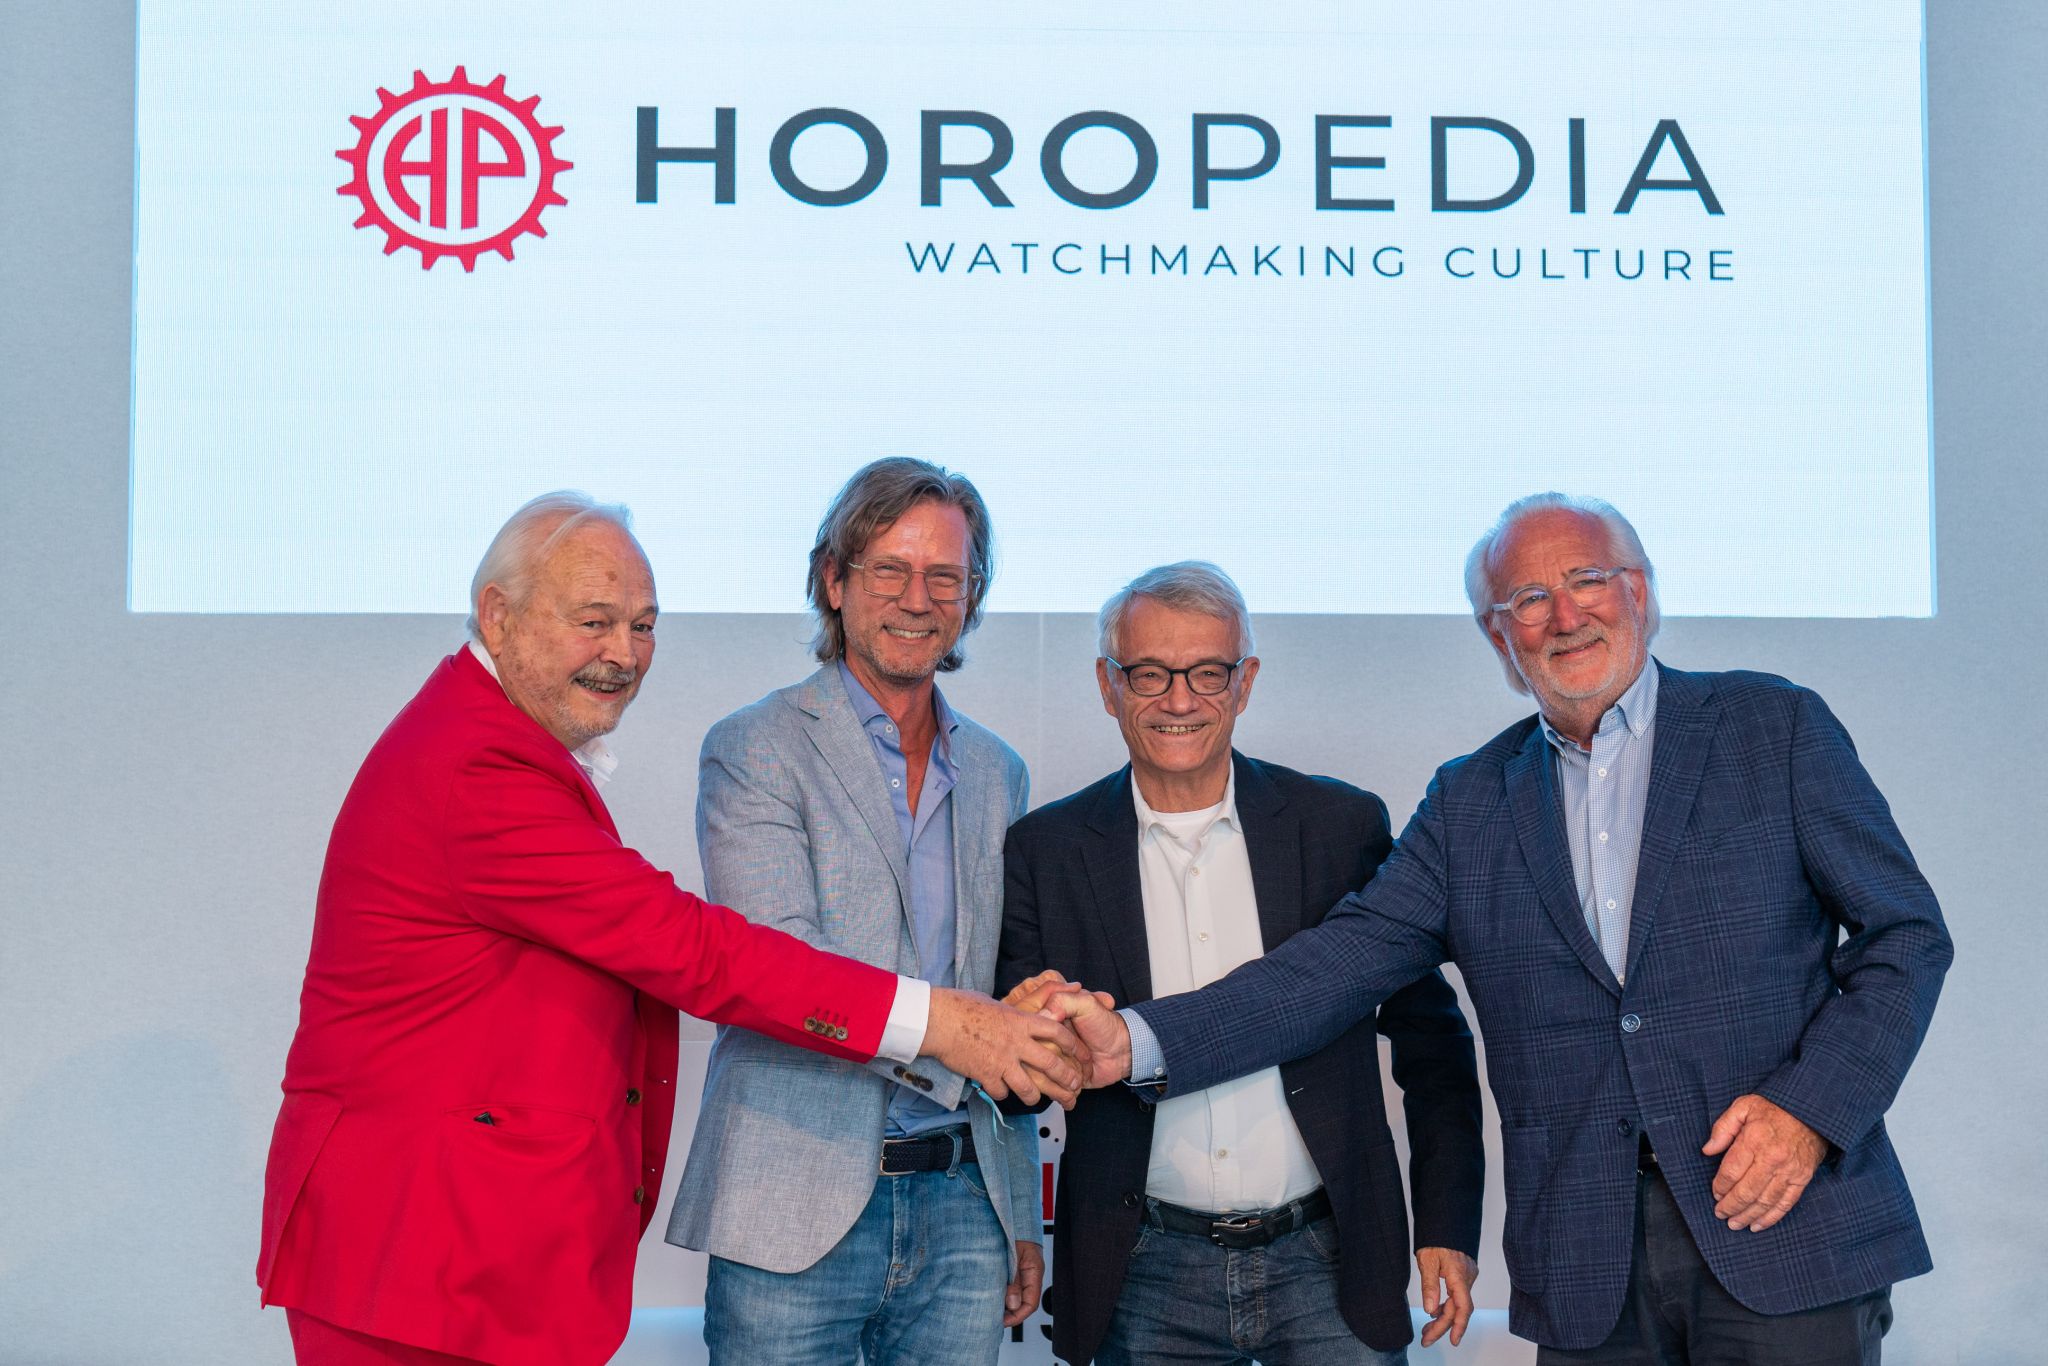 HOROPEDIA Foundation is born!